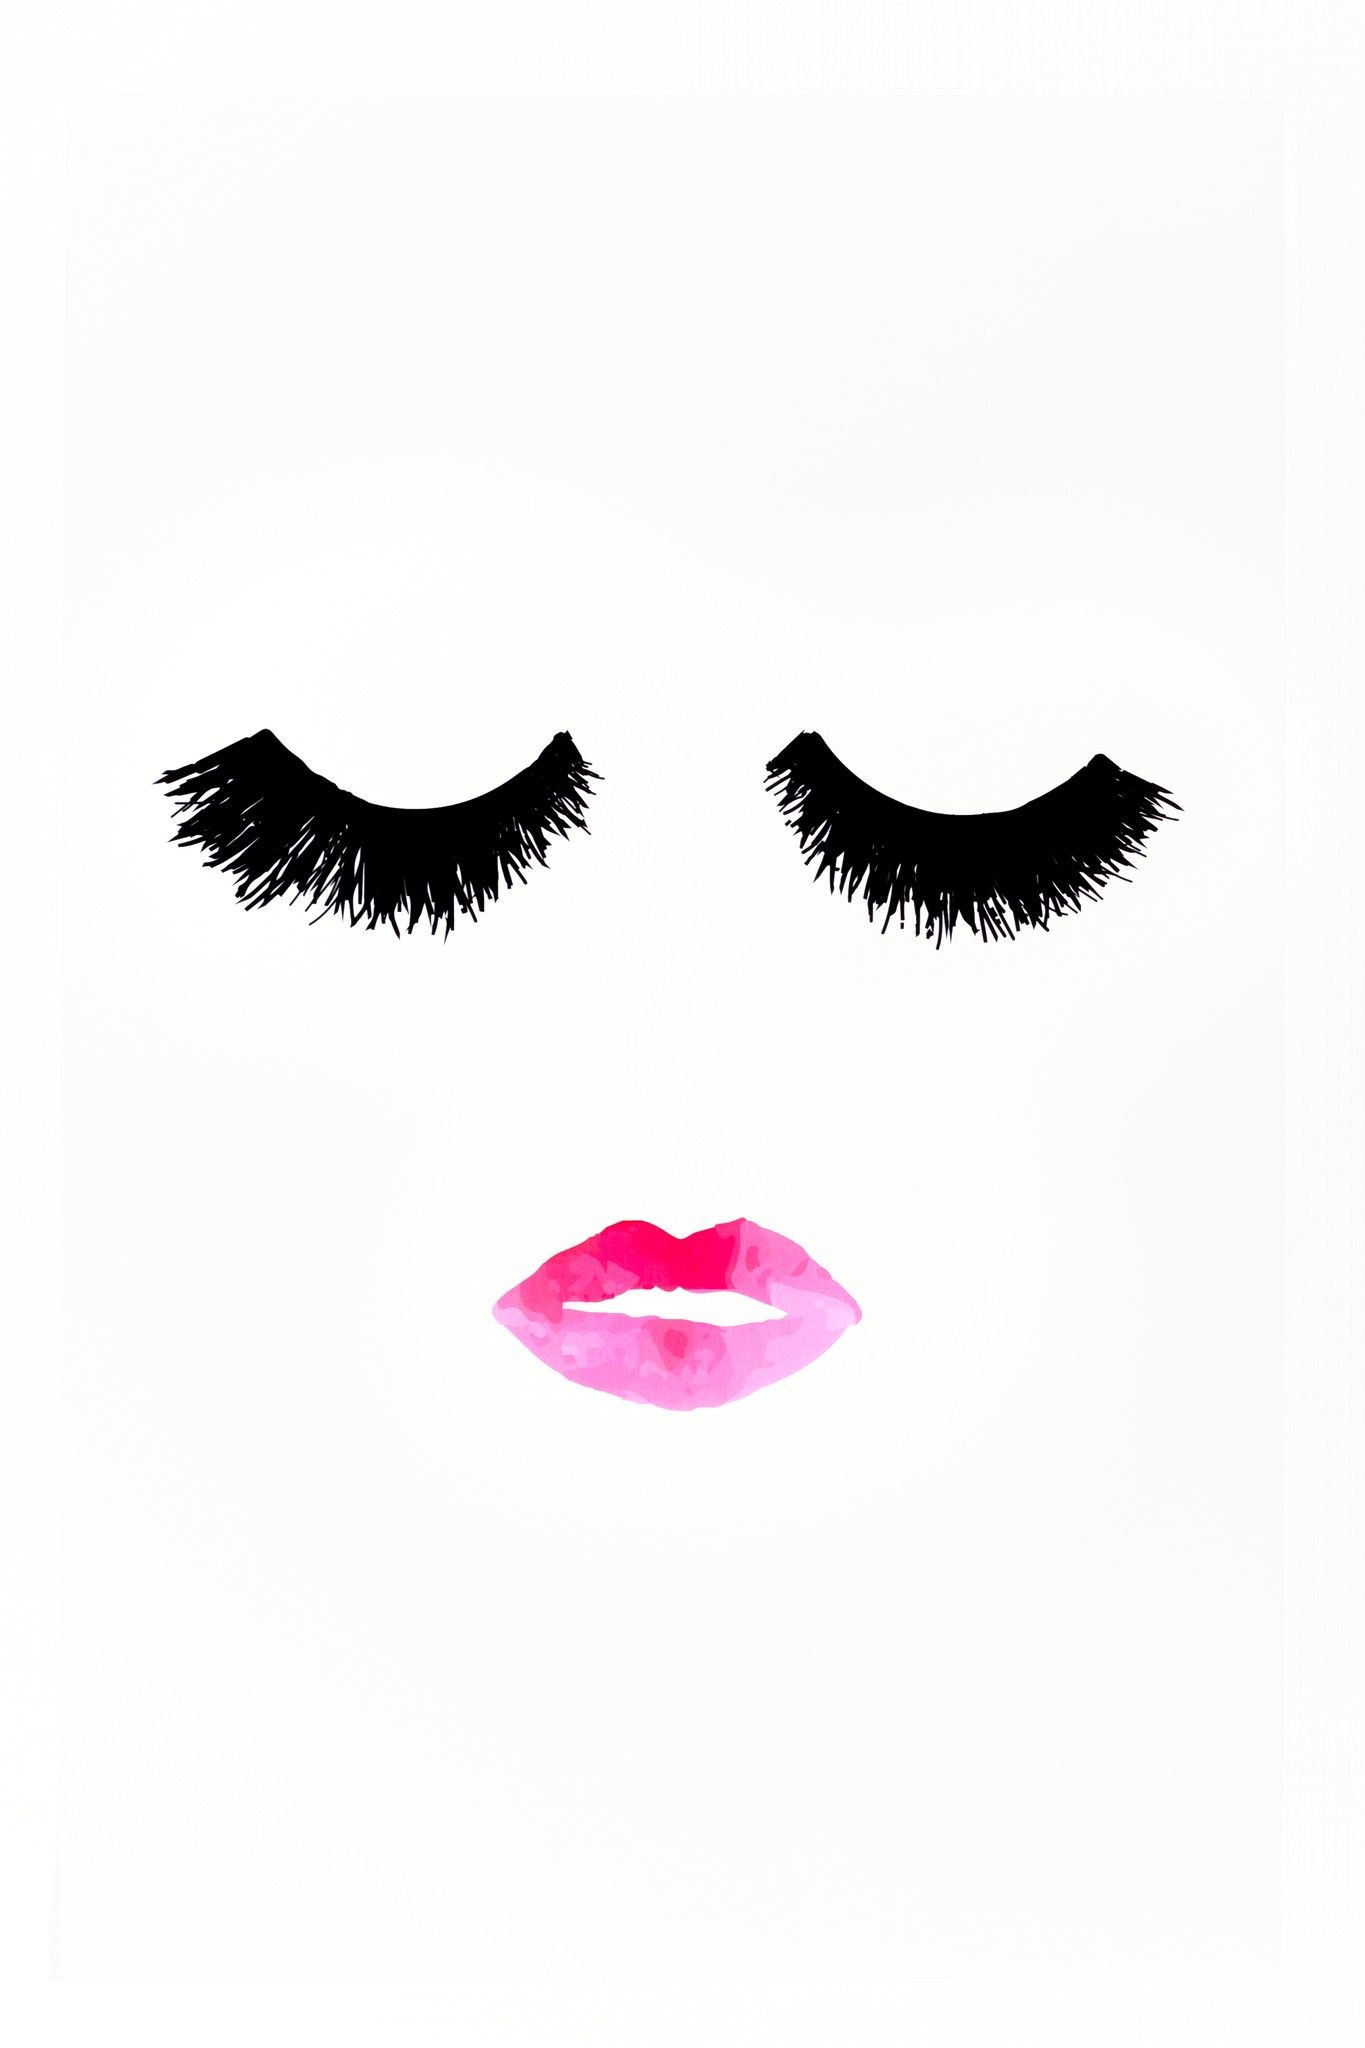 makeup wallpaper tumblr,eyelash,cosmetics,eyebrow,eye,lip